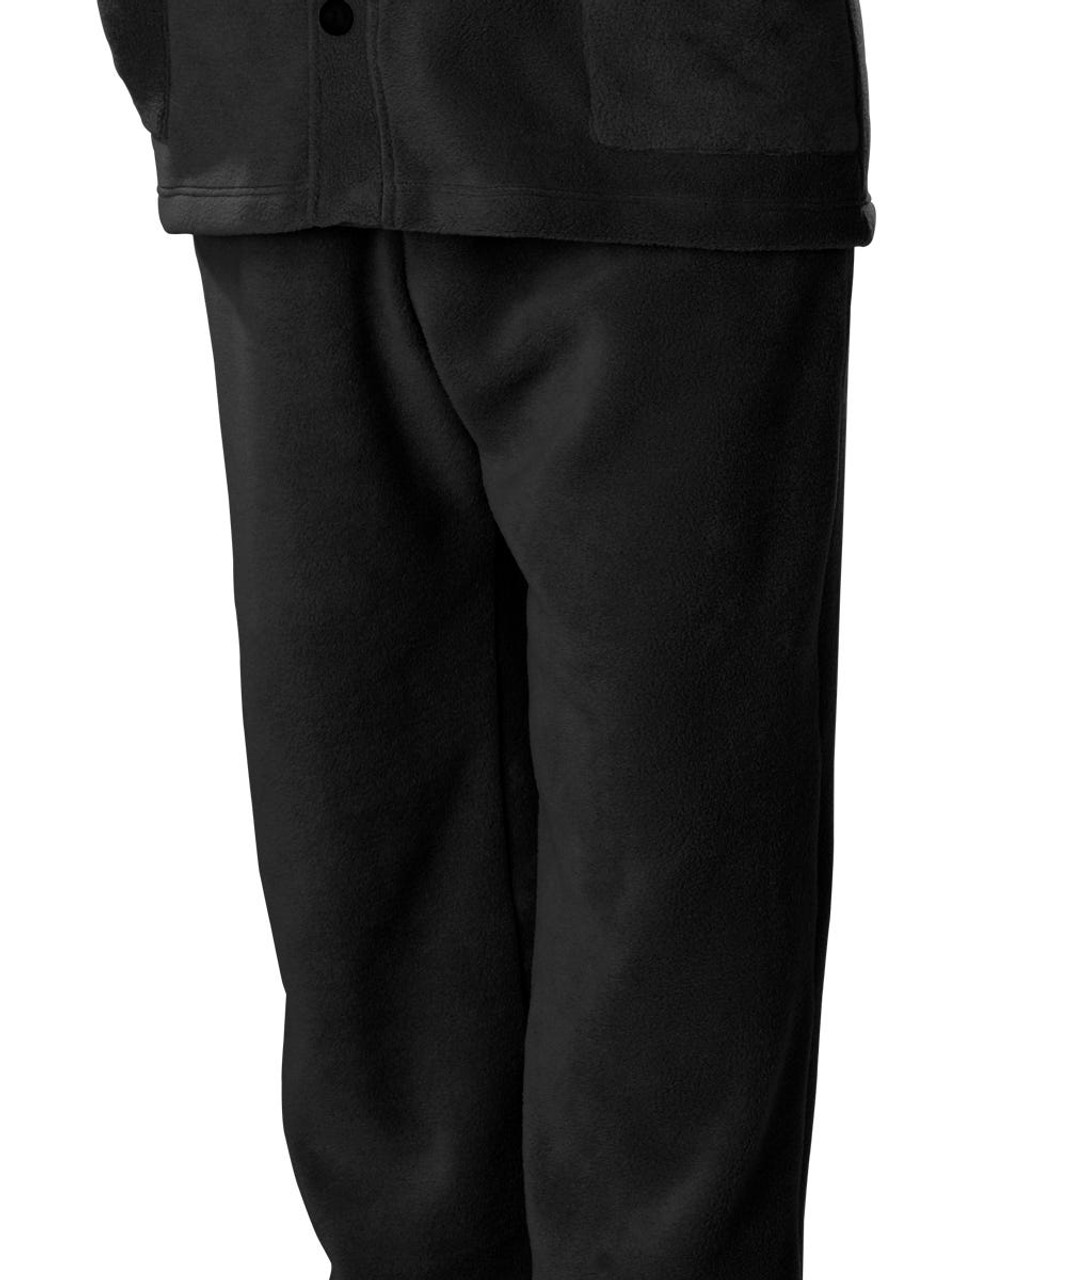 Silverts SV51810 Mens Easy Access Clothing Polar Fleece Pants - Best Arthritis Pants Black, Size=L, SV51810-SV2-L